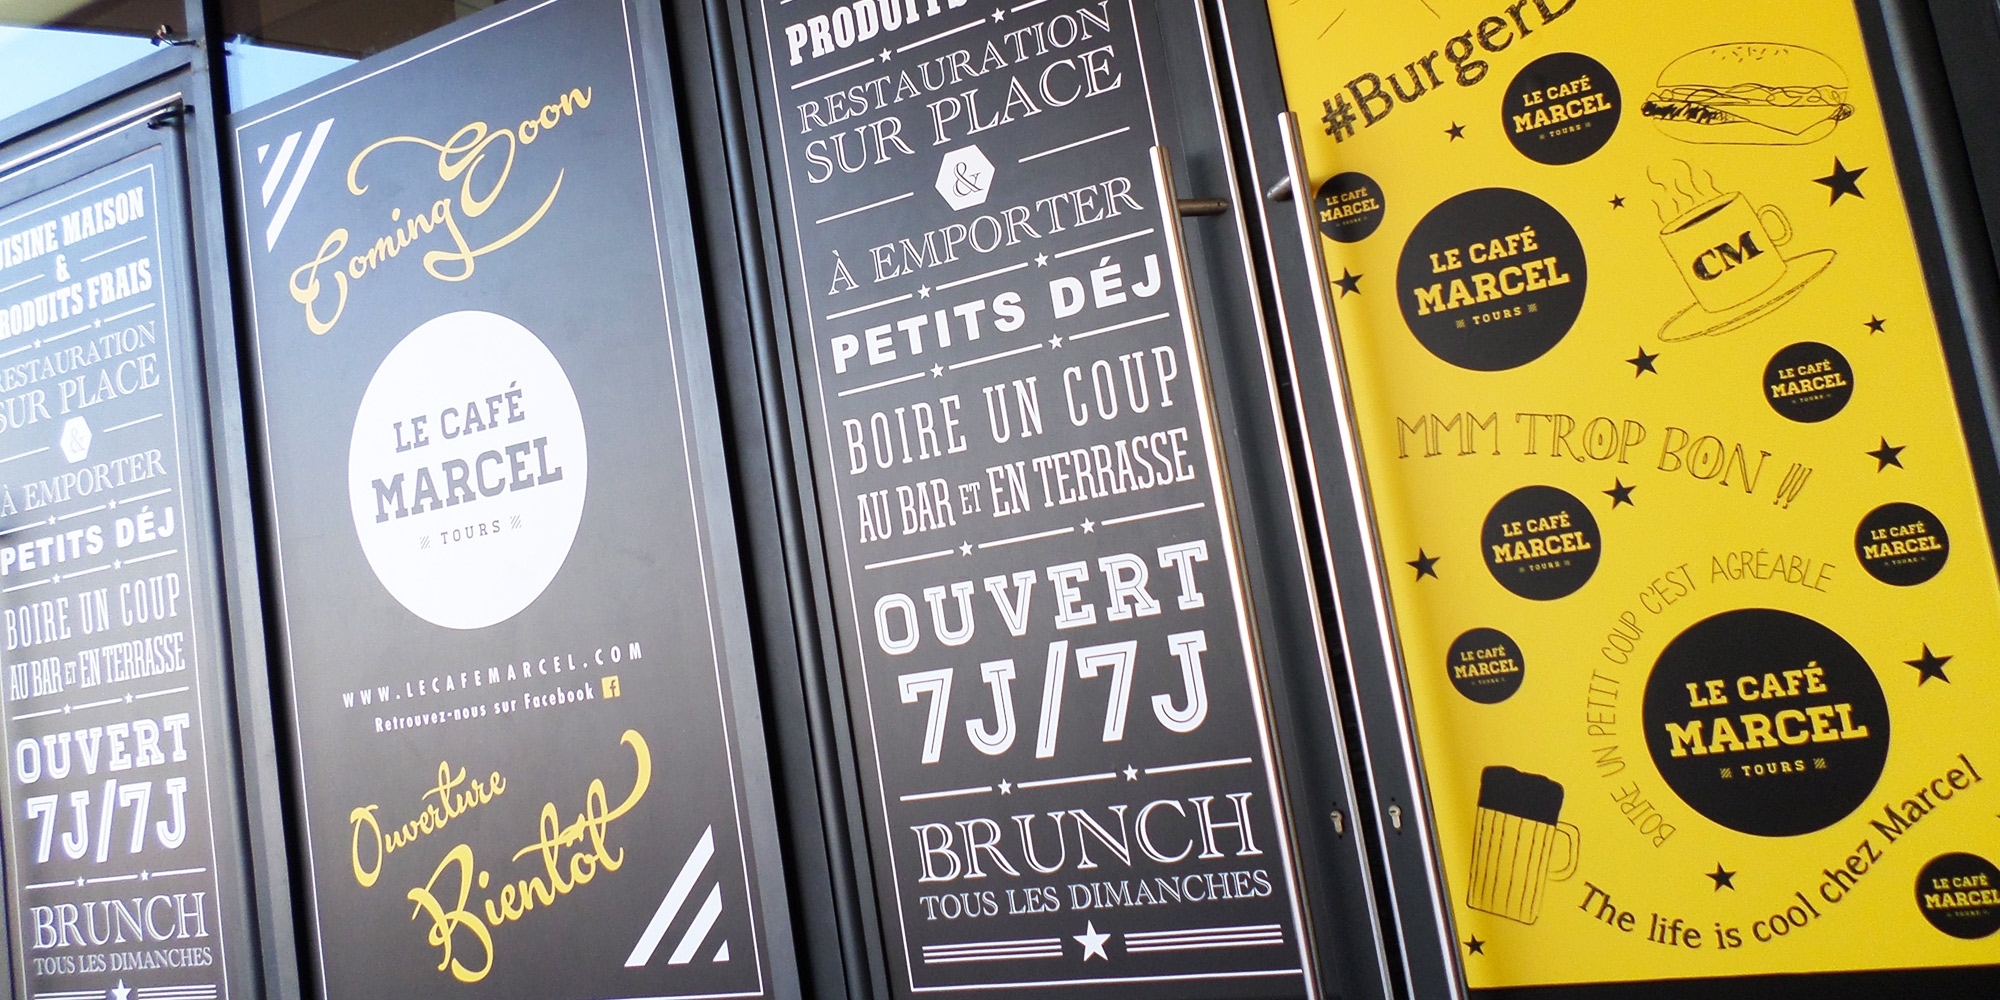 Café Marcel Tours 37, design stickers vitrine - Beautiful Georges